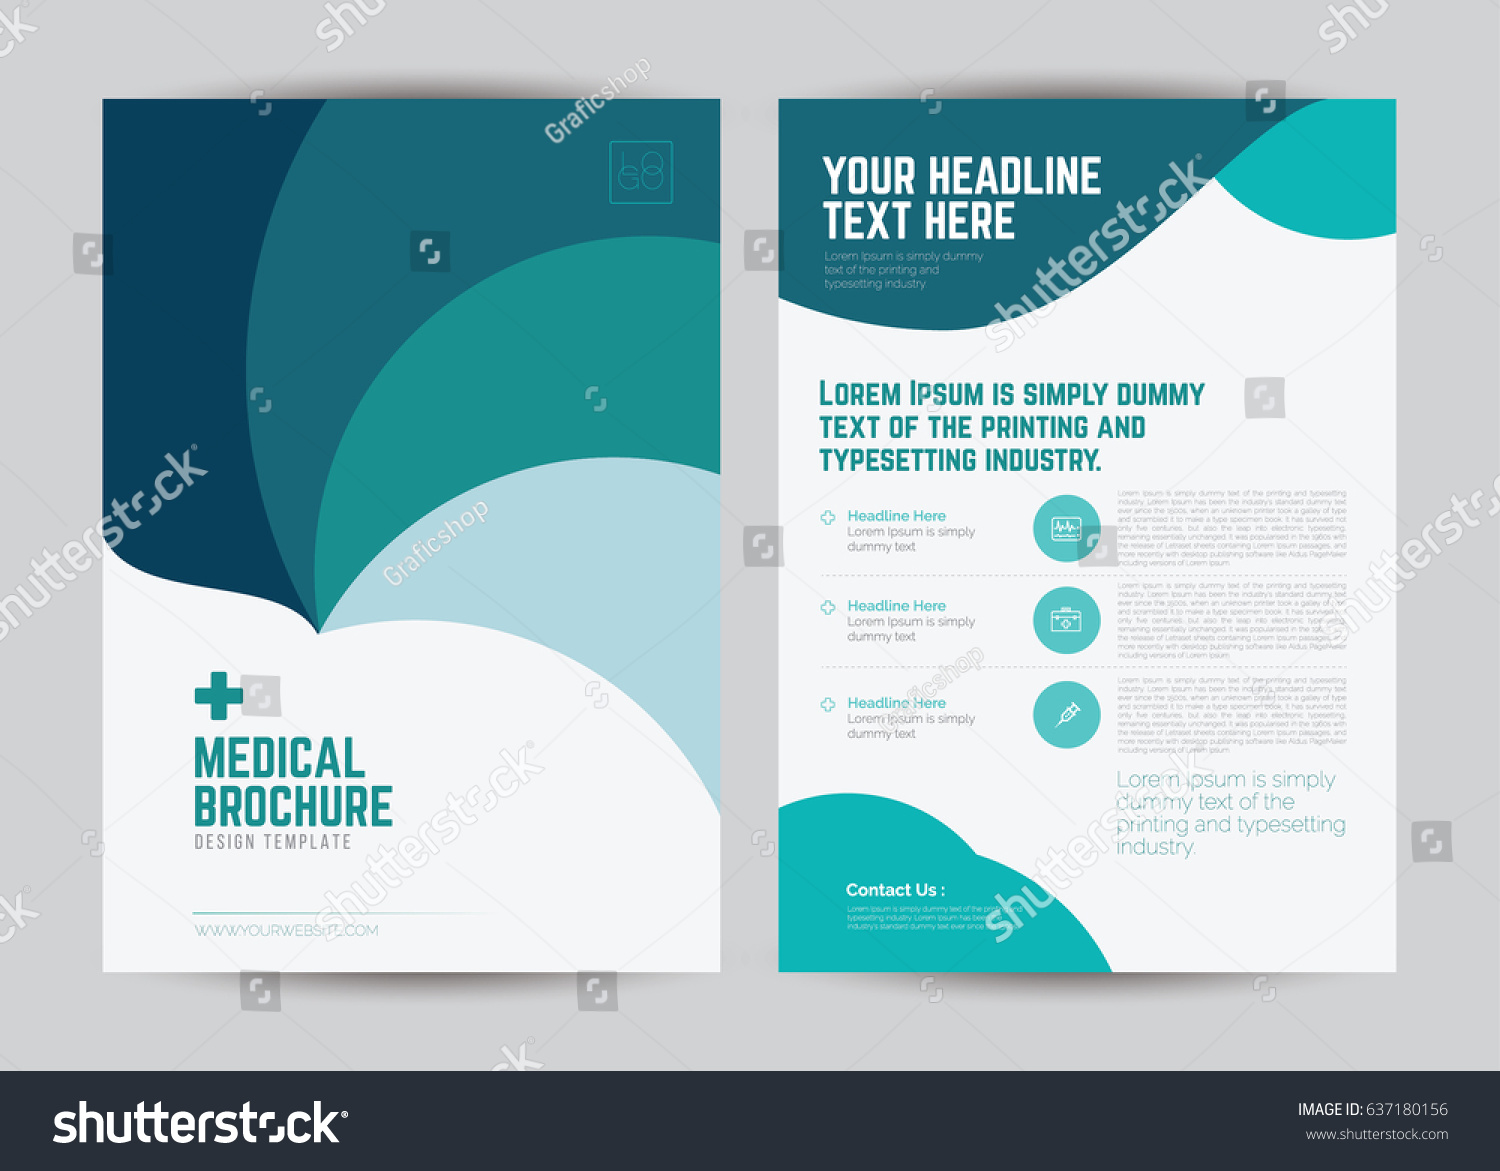 Medical Brochure Flyer Template Design Stock Vector Royalty Free